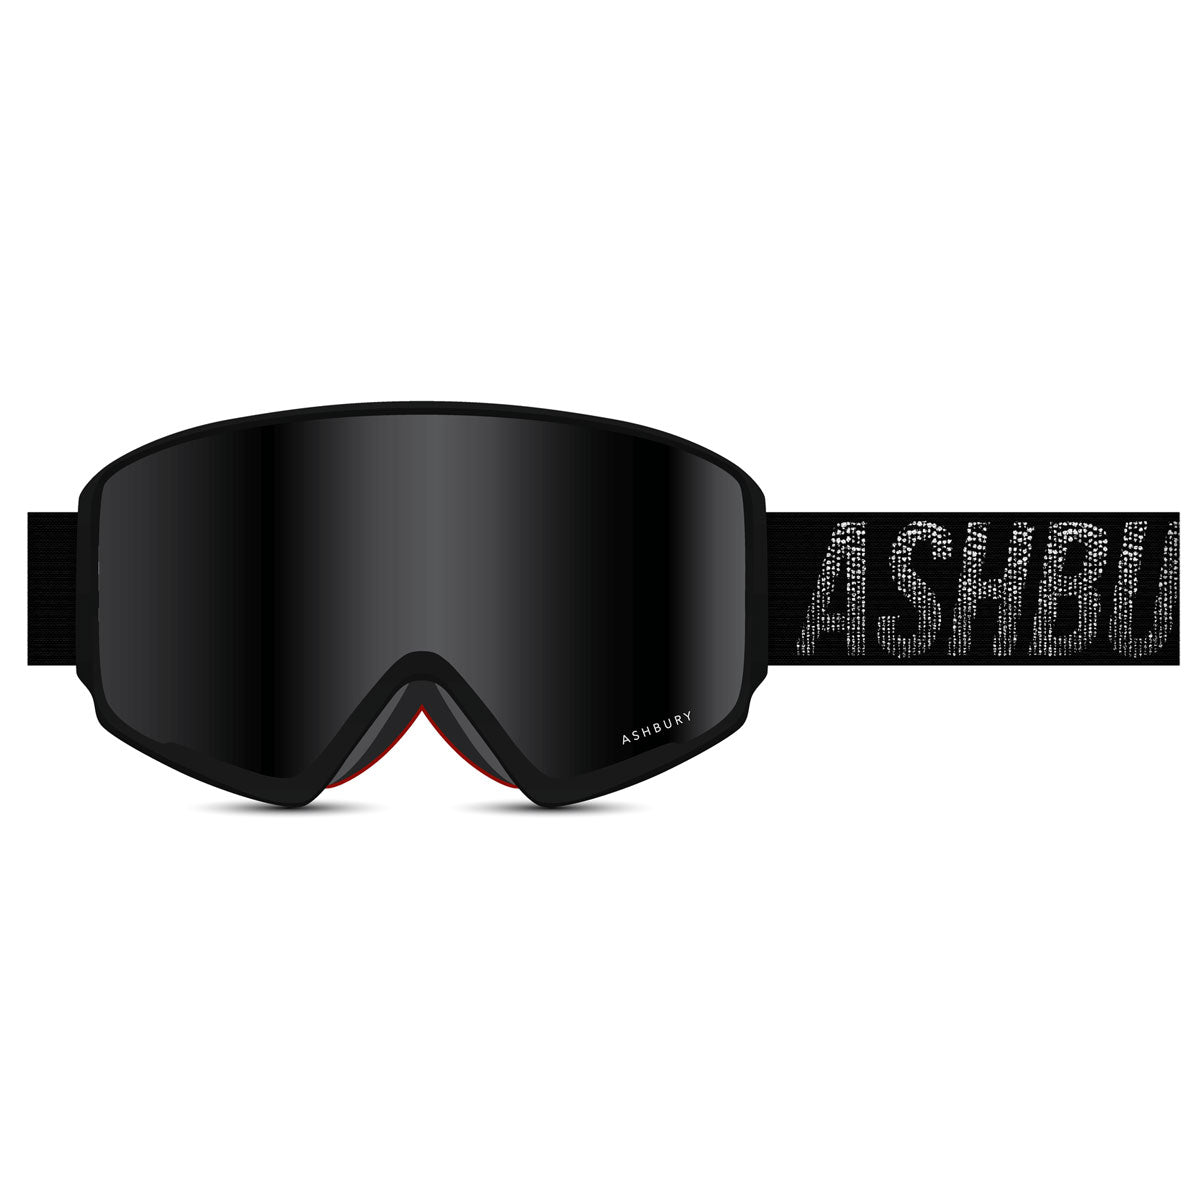 Ashbury Arrow Sundown Snowboard Goggles - Dark Smoke/Yellow Spare image 1